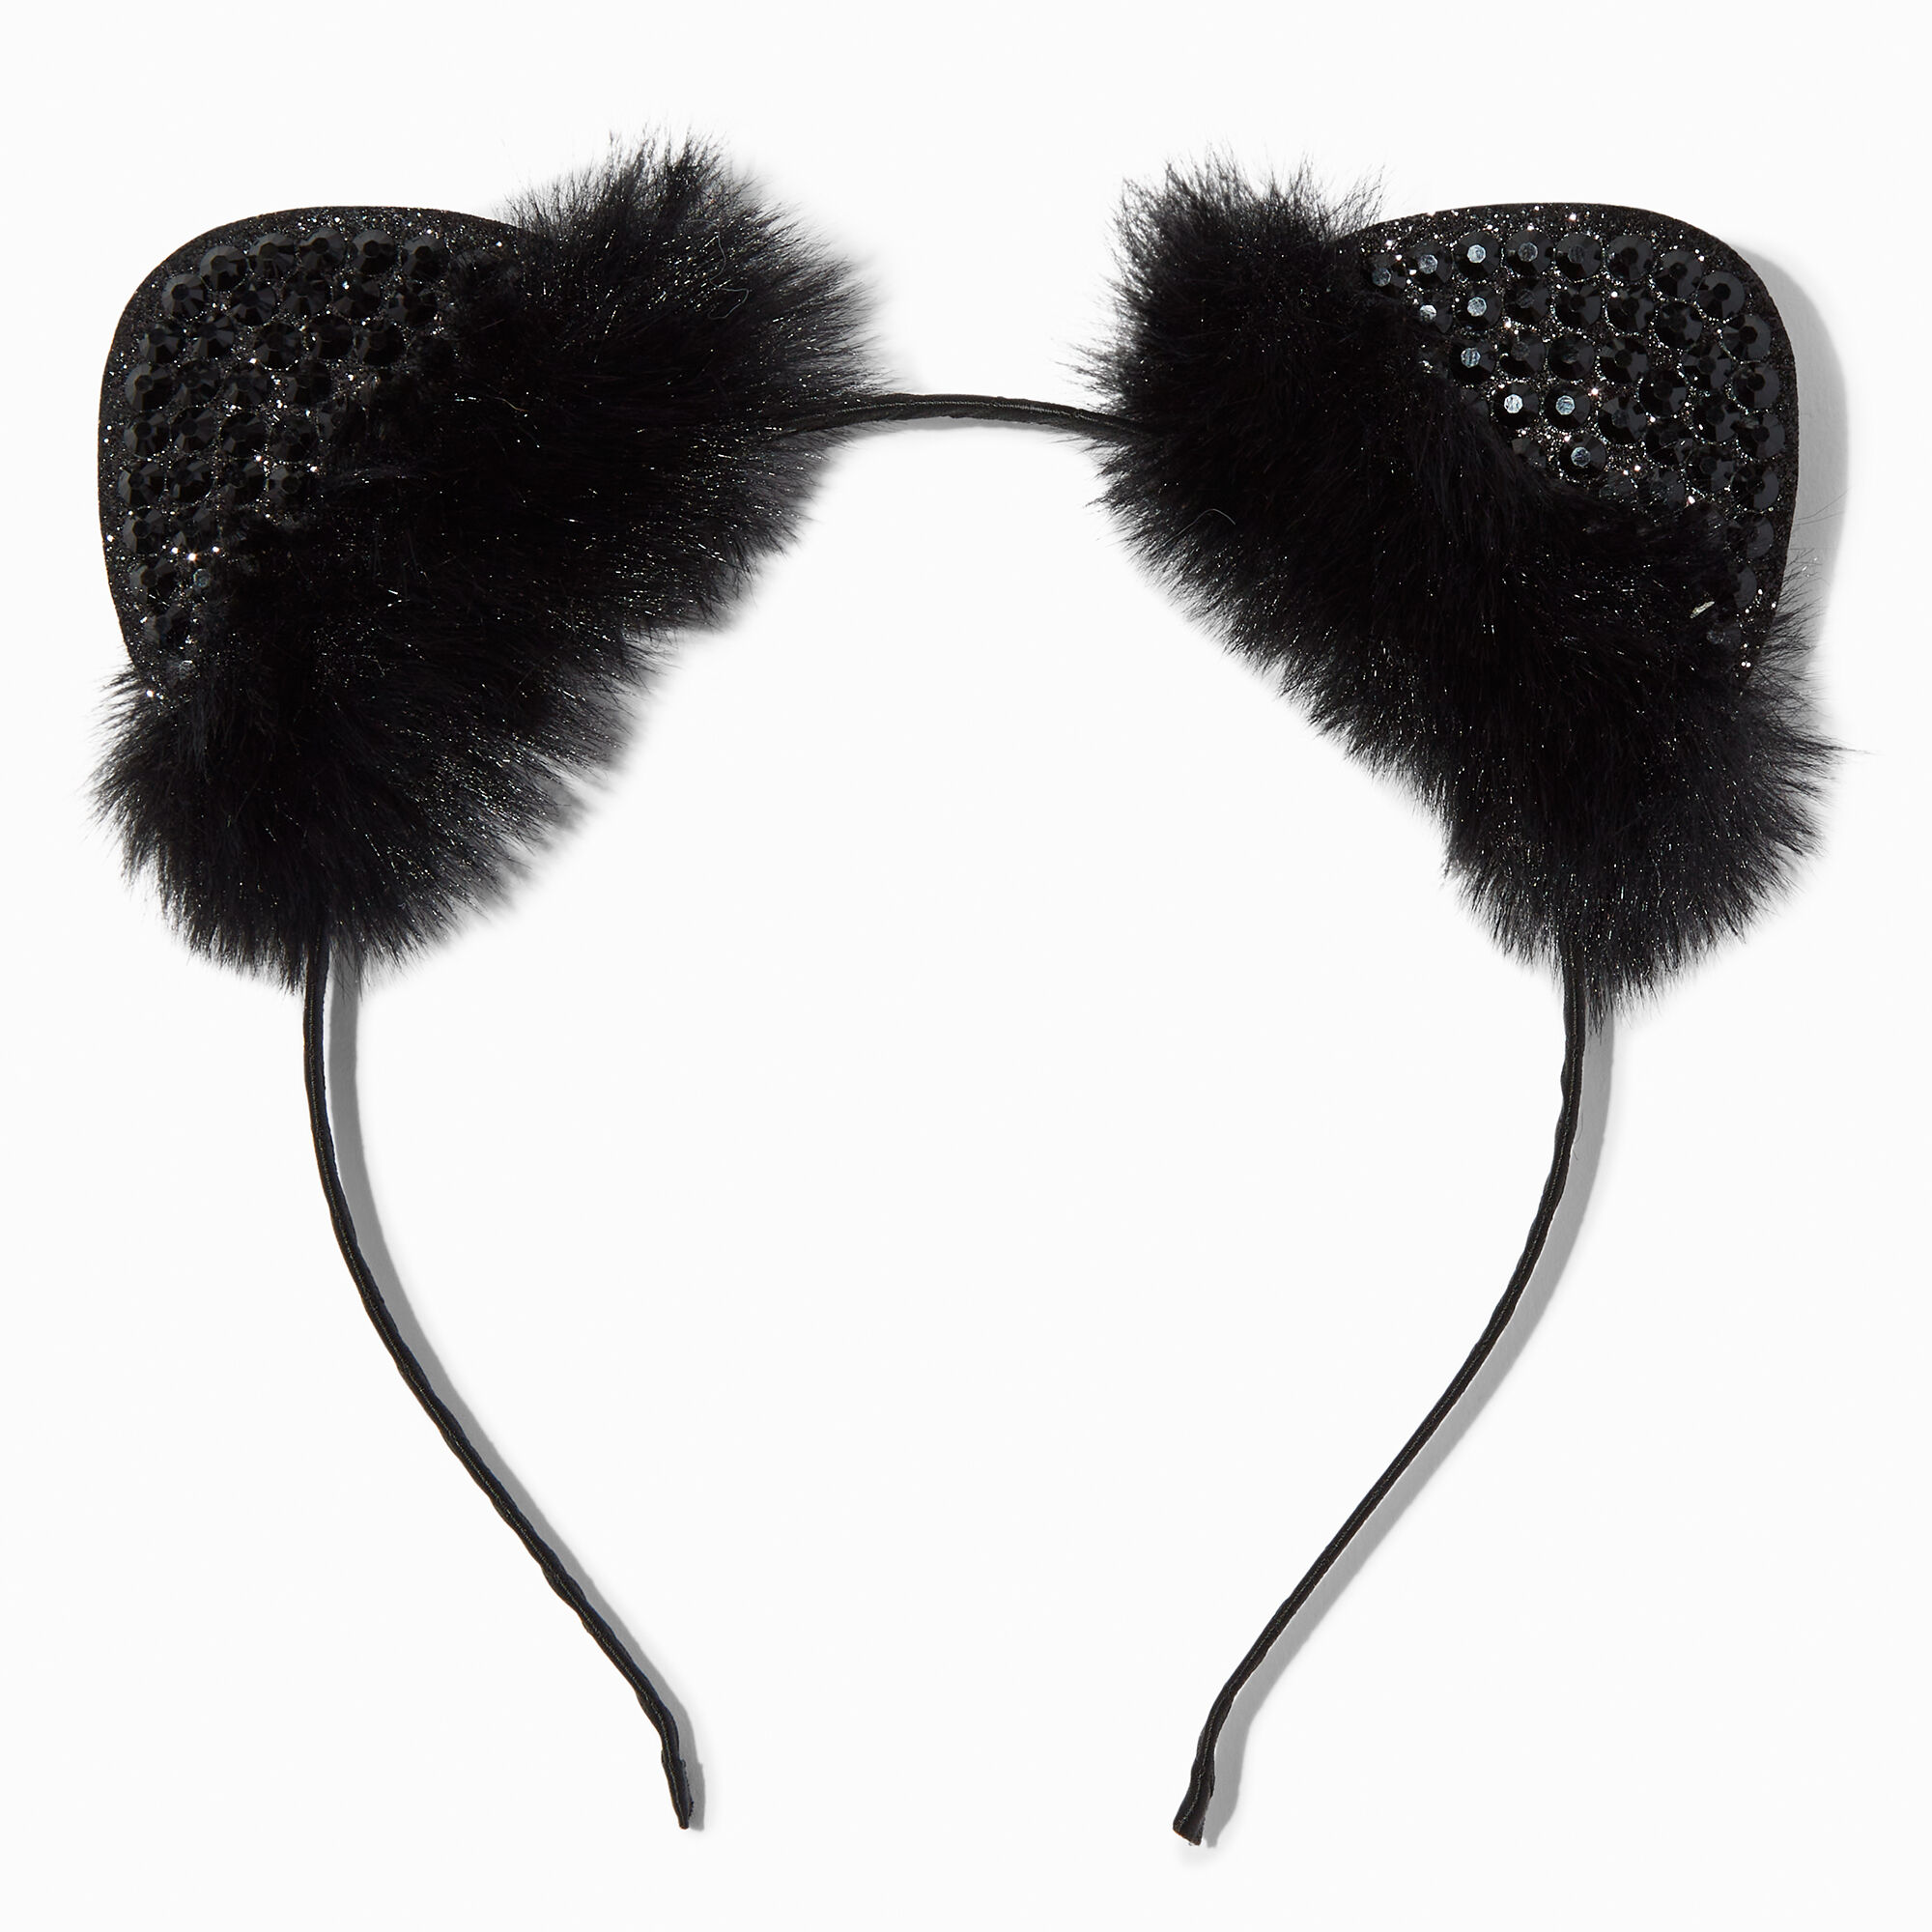 View Claires Fur Gemstones Cat Ears Headband Black information